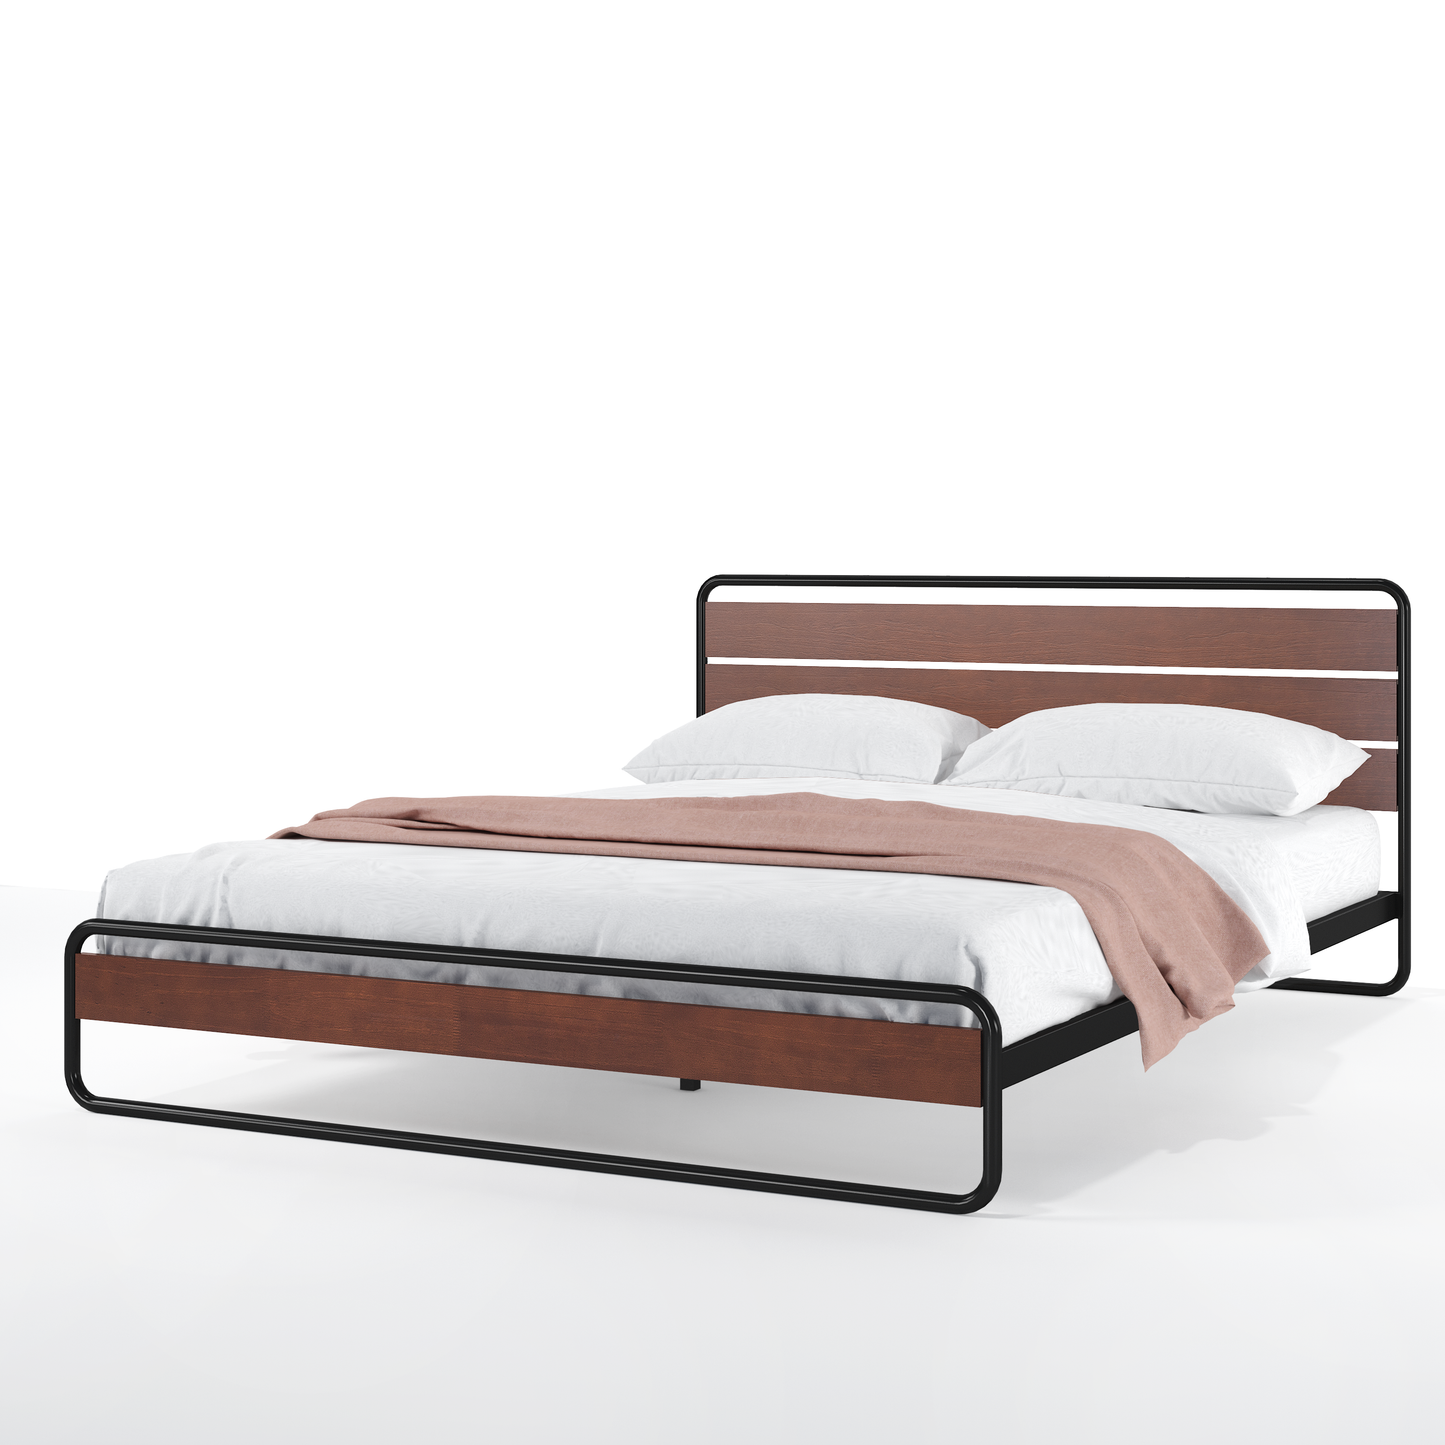 Horizon Metal and Wood Platform Bed Frame